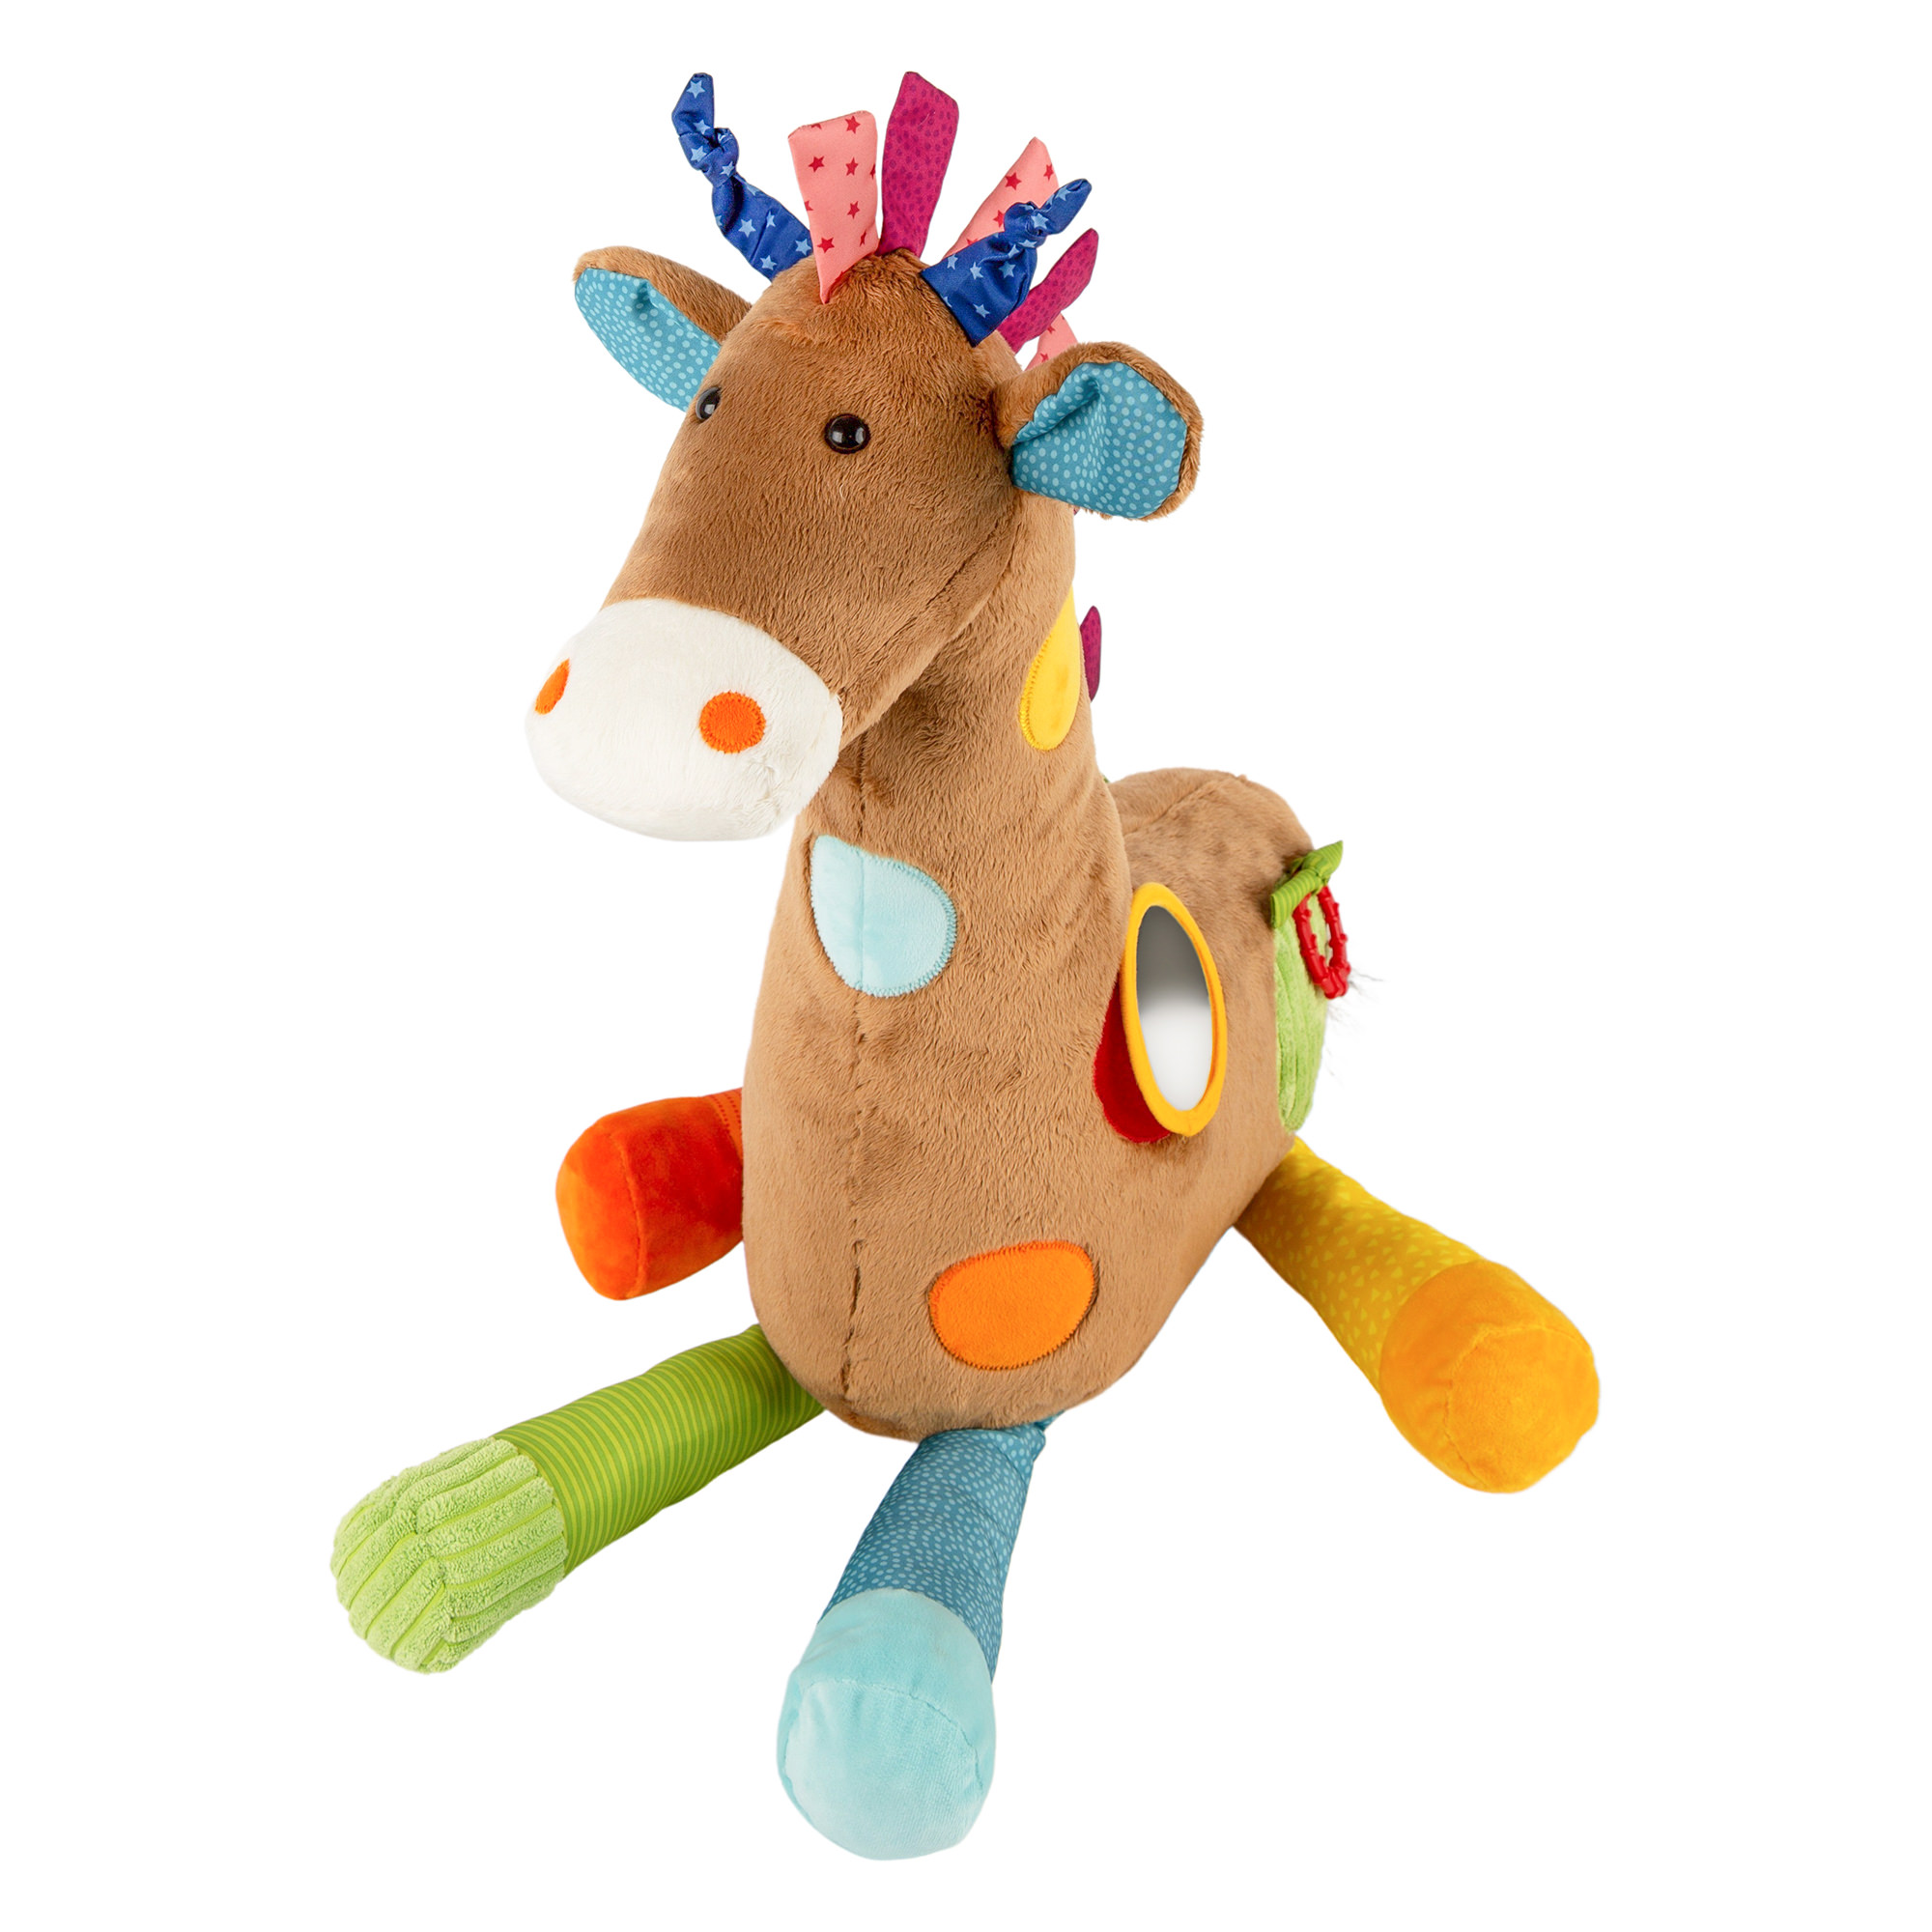 XXL plush giraffe baby activity toy, PlayQ